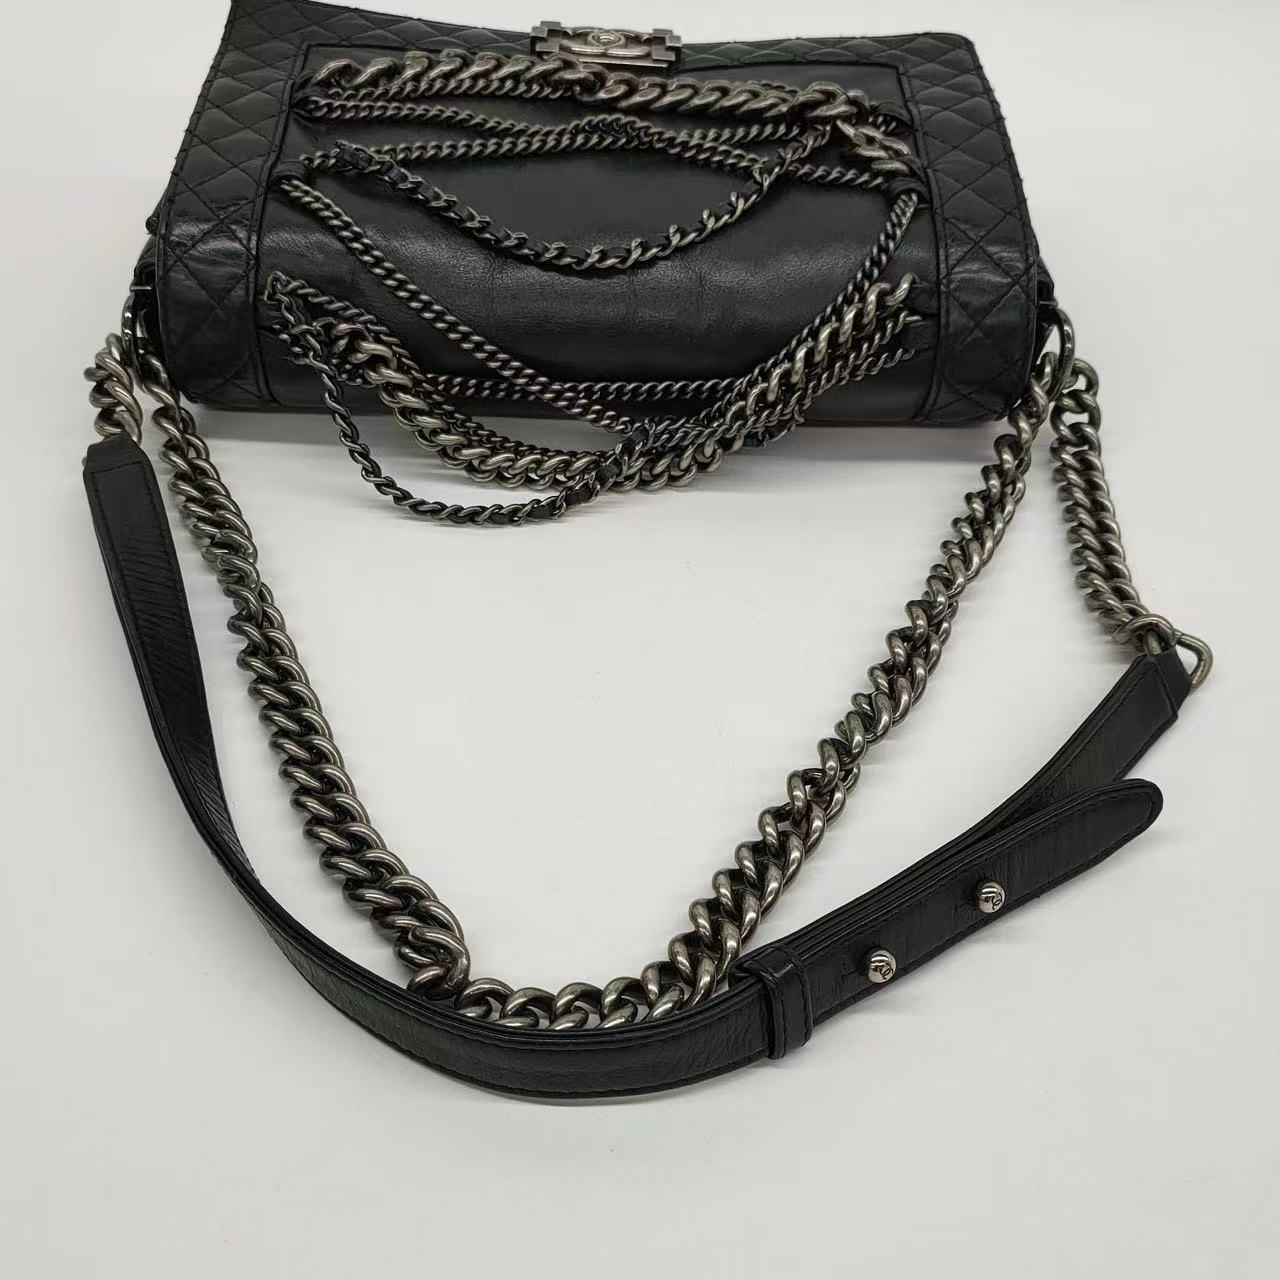 Women's Chanel Enchained Boy Bag 2012 Black Leather Medium Flap Bag For Sale